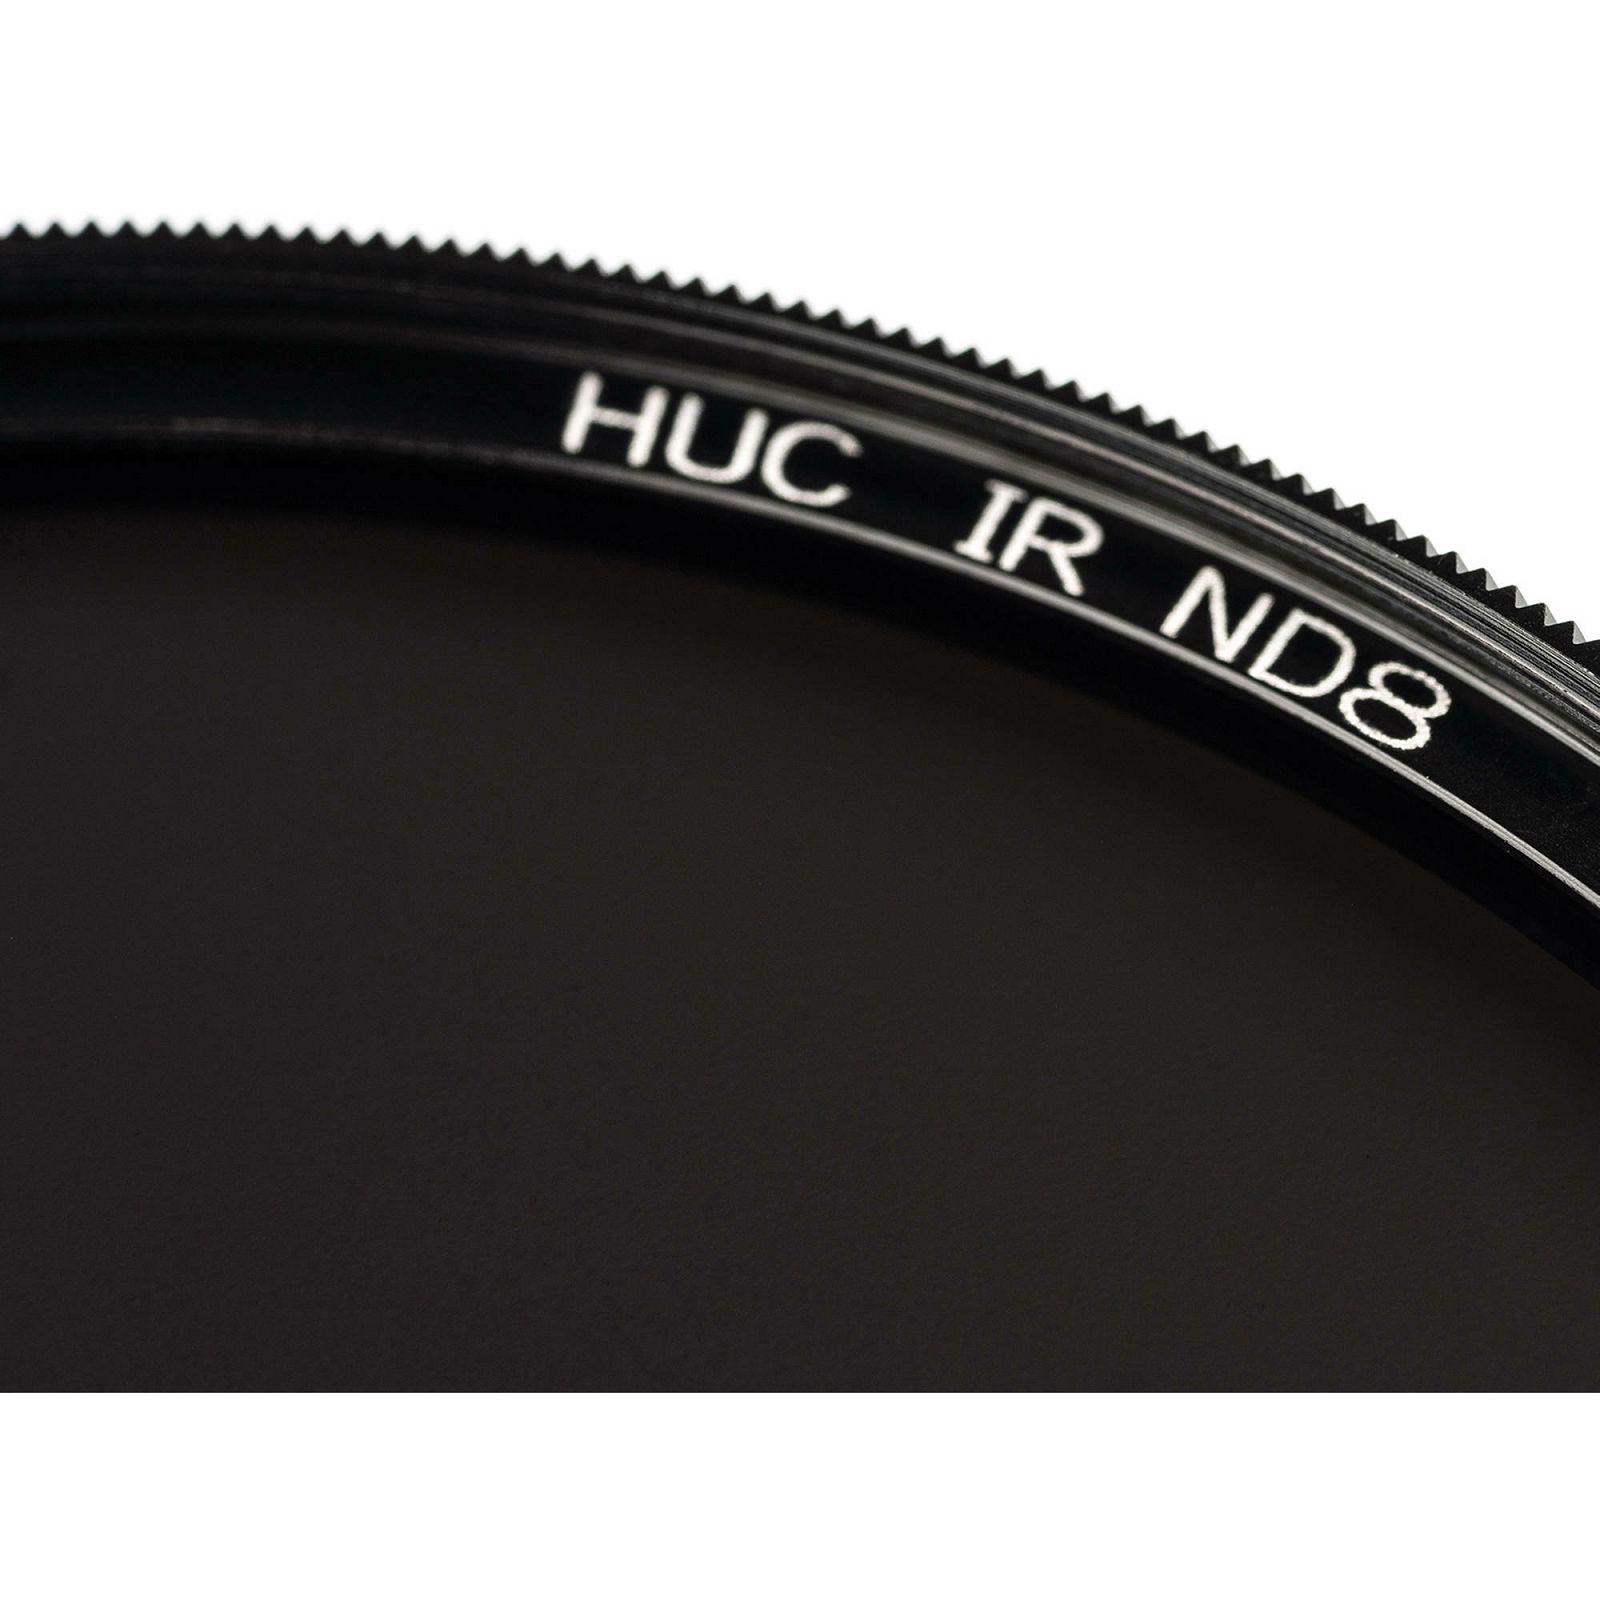 NiSi PRO Nano HUC IR ND8 ND filter 46mm